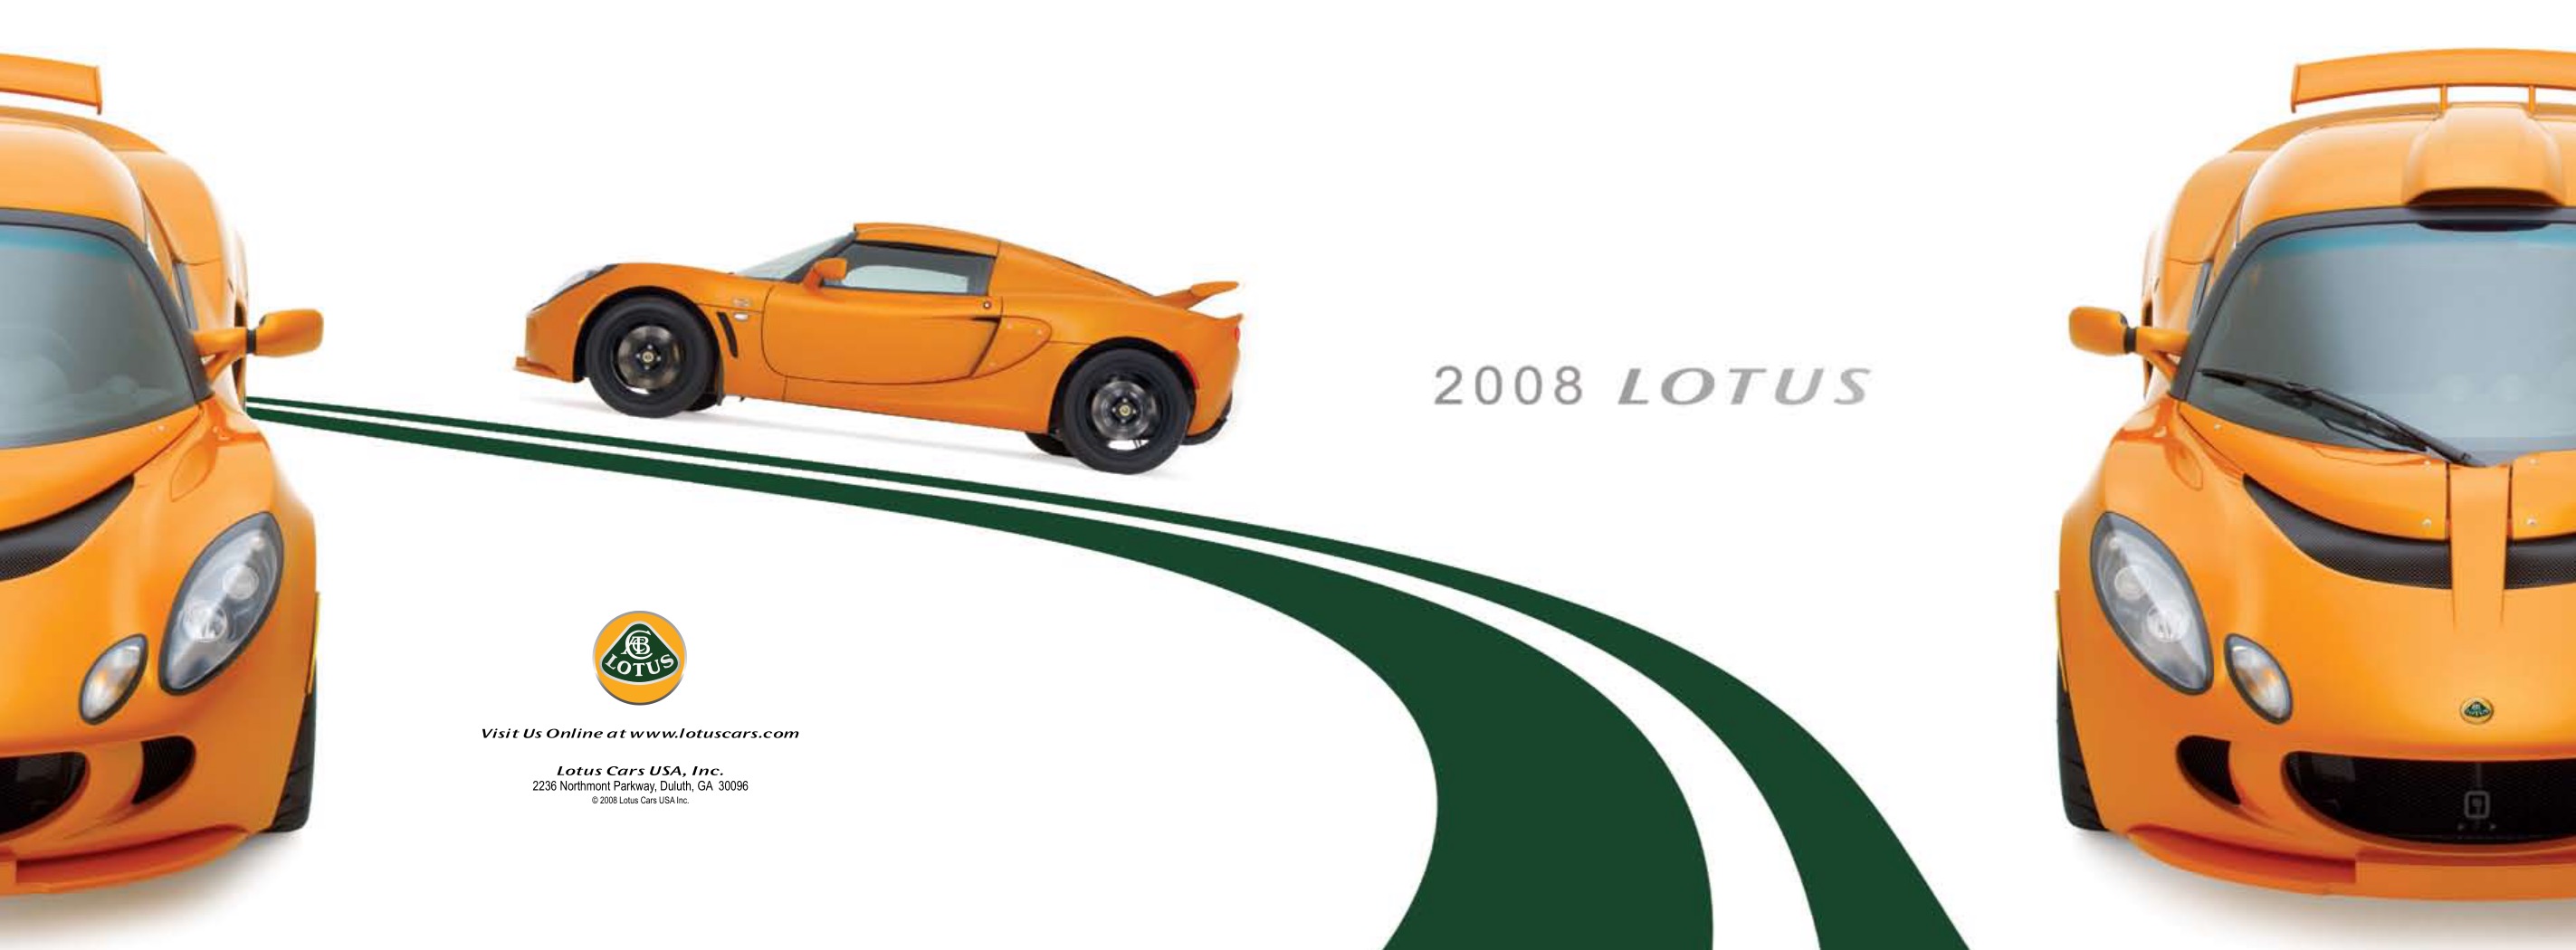 2008 Lotus Brochure